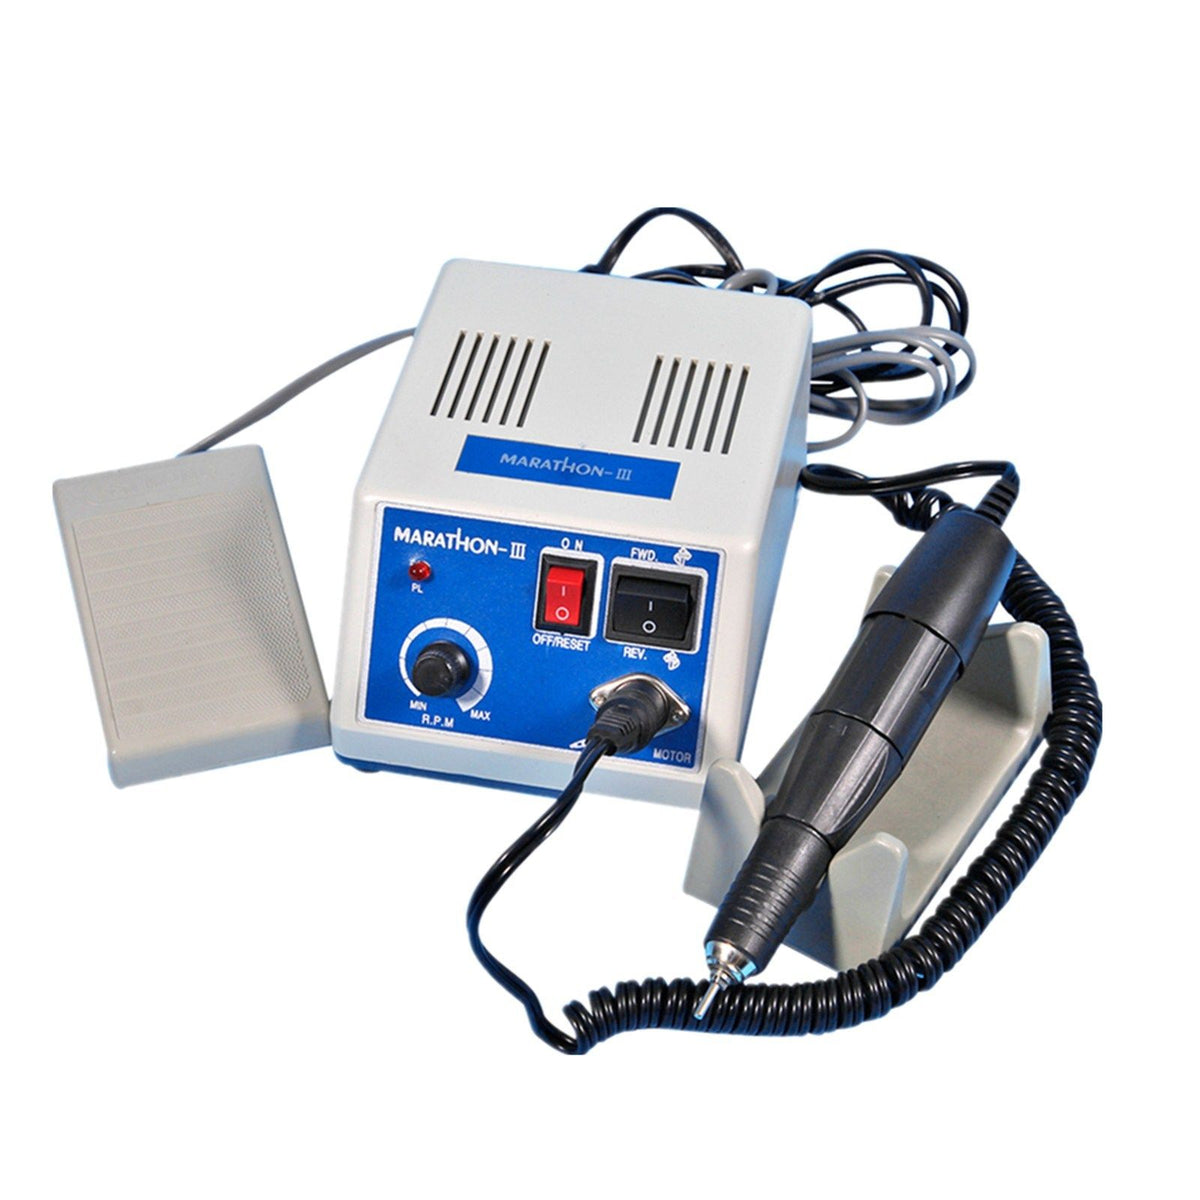 Micromotor dental - MO-93-2LFA - EURODENT - clínico / eléctrico